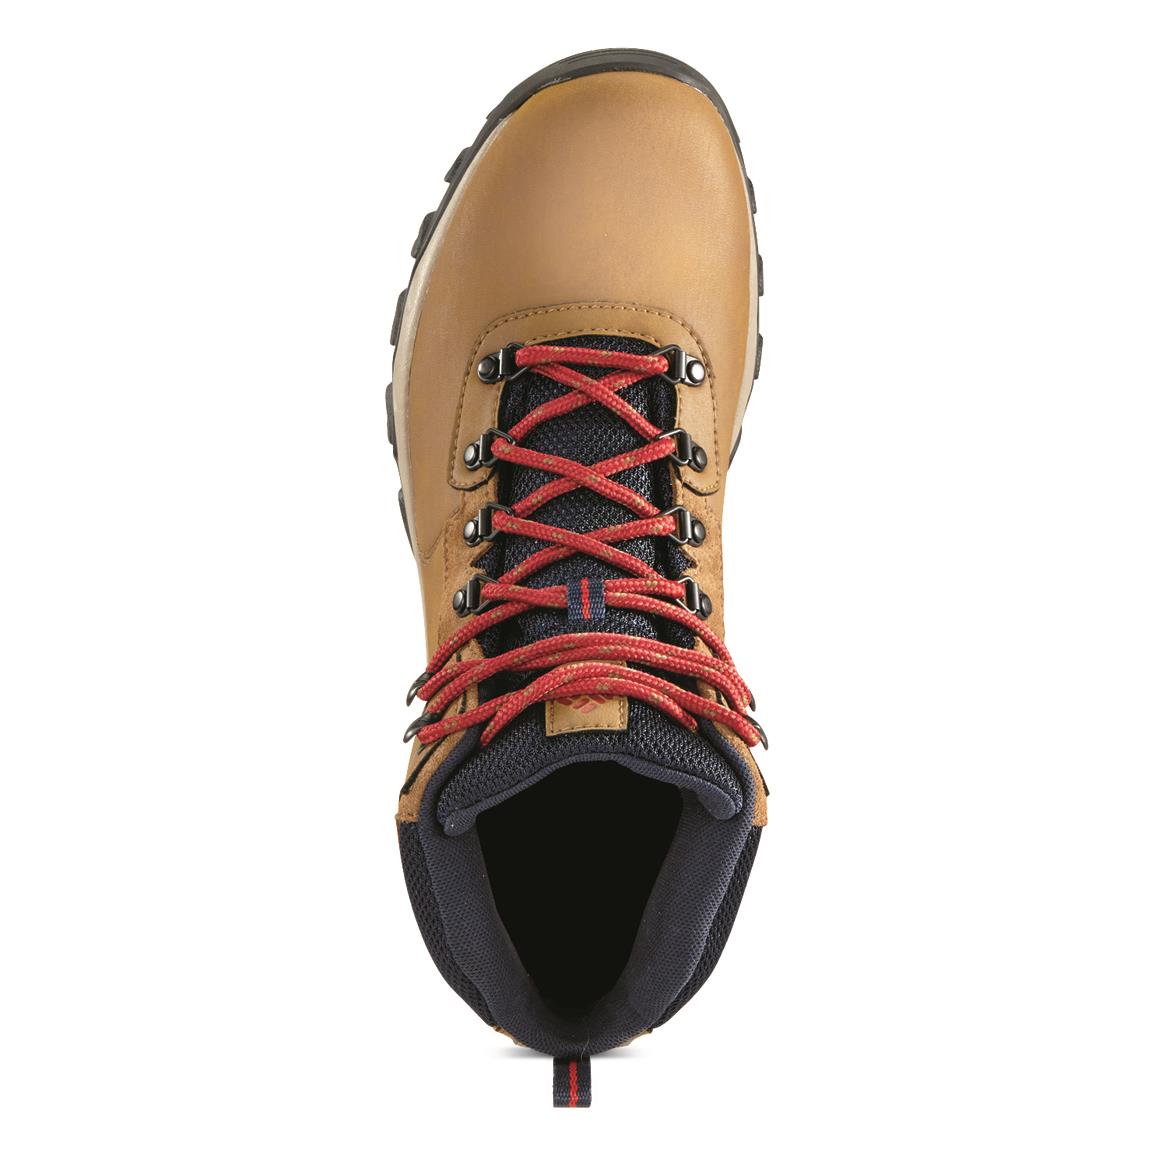 Columbia Men's Newton Ridge Waterproof Omni-Heat II Hiking Boots ...